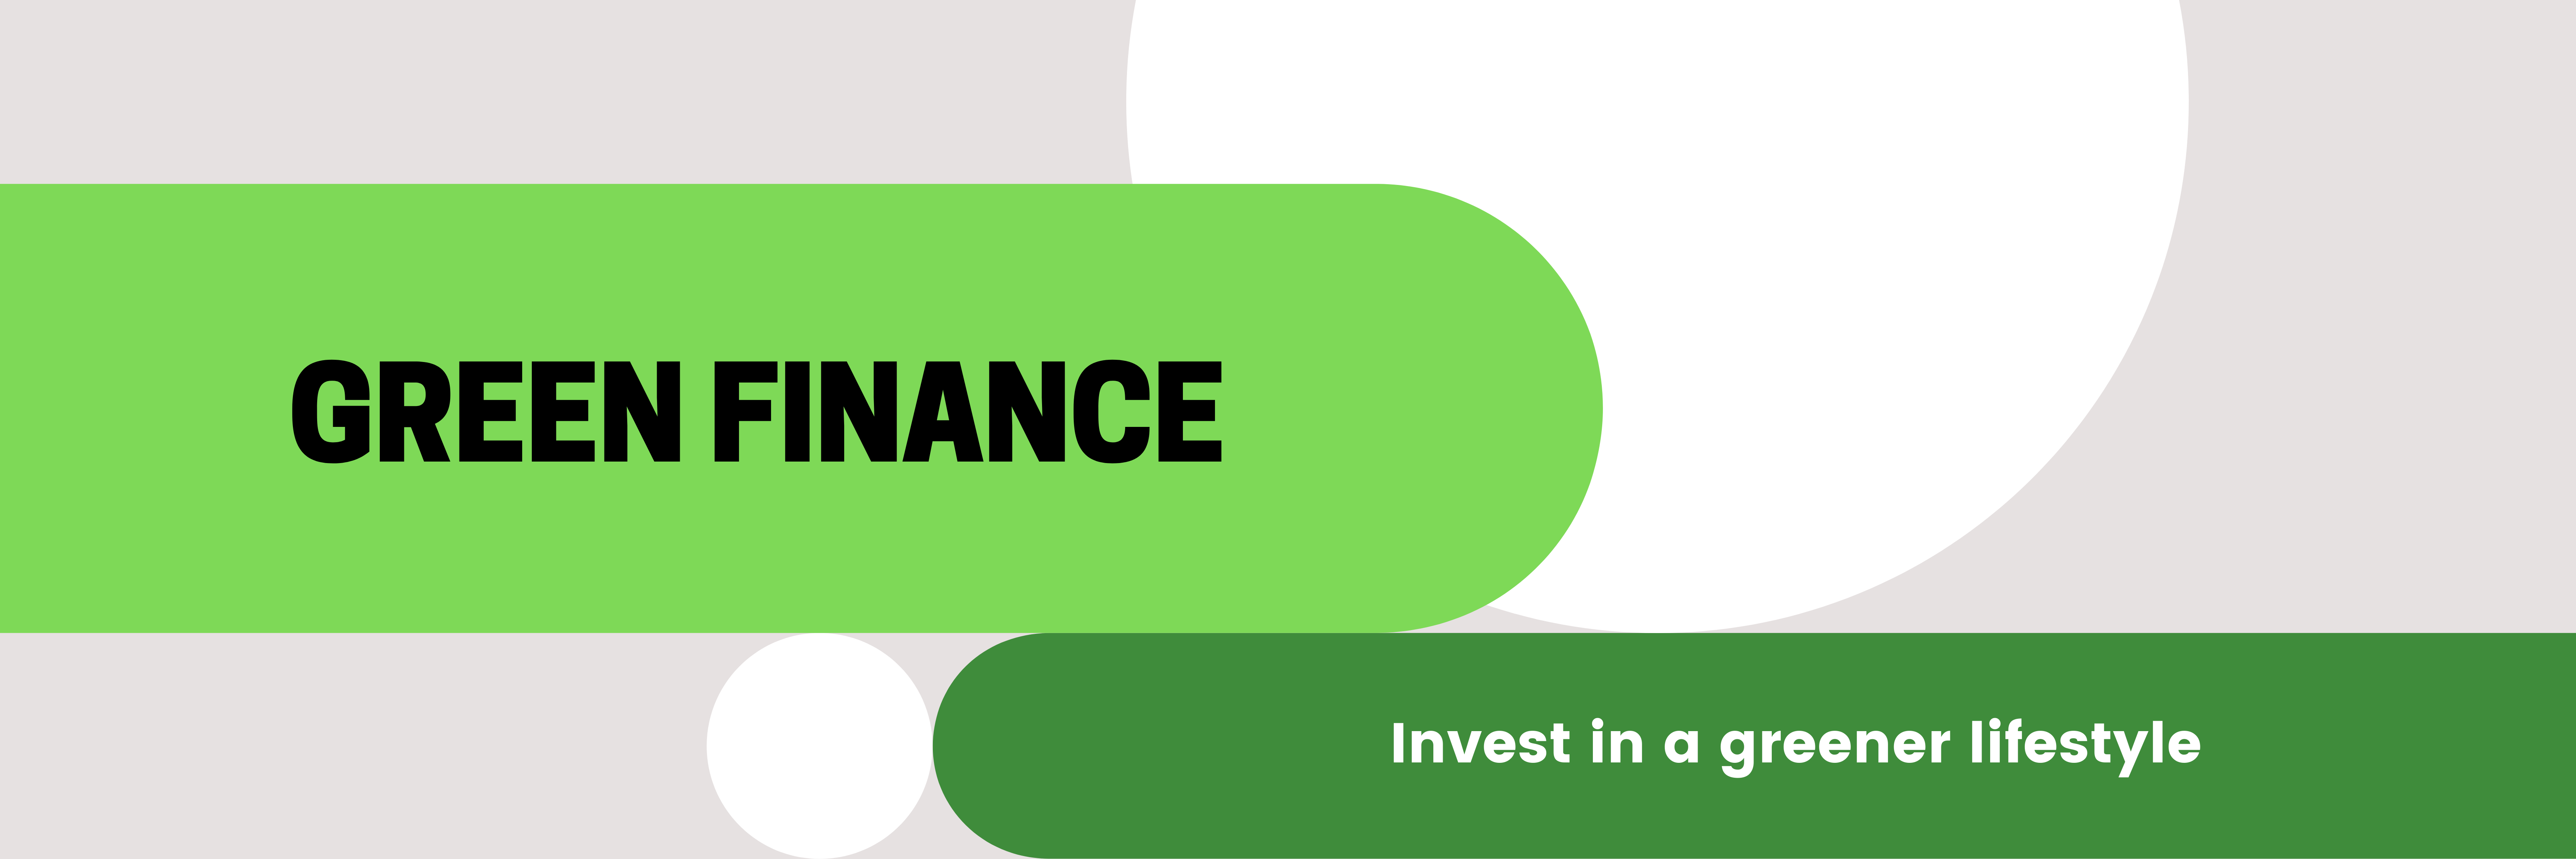 Green Financing Webpage Banner.png